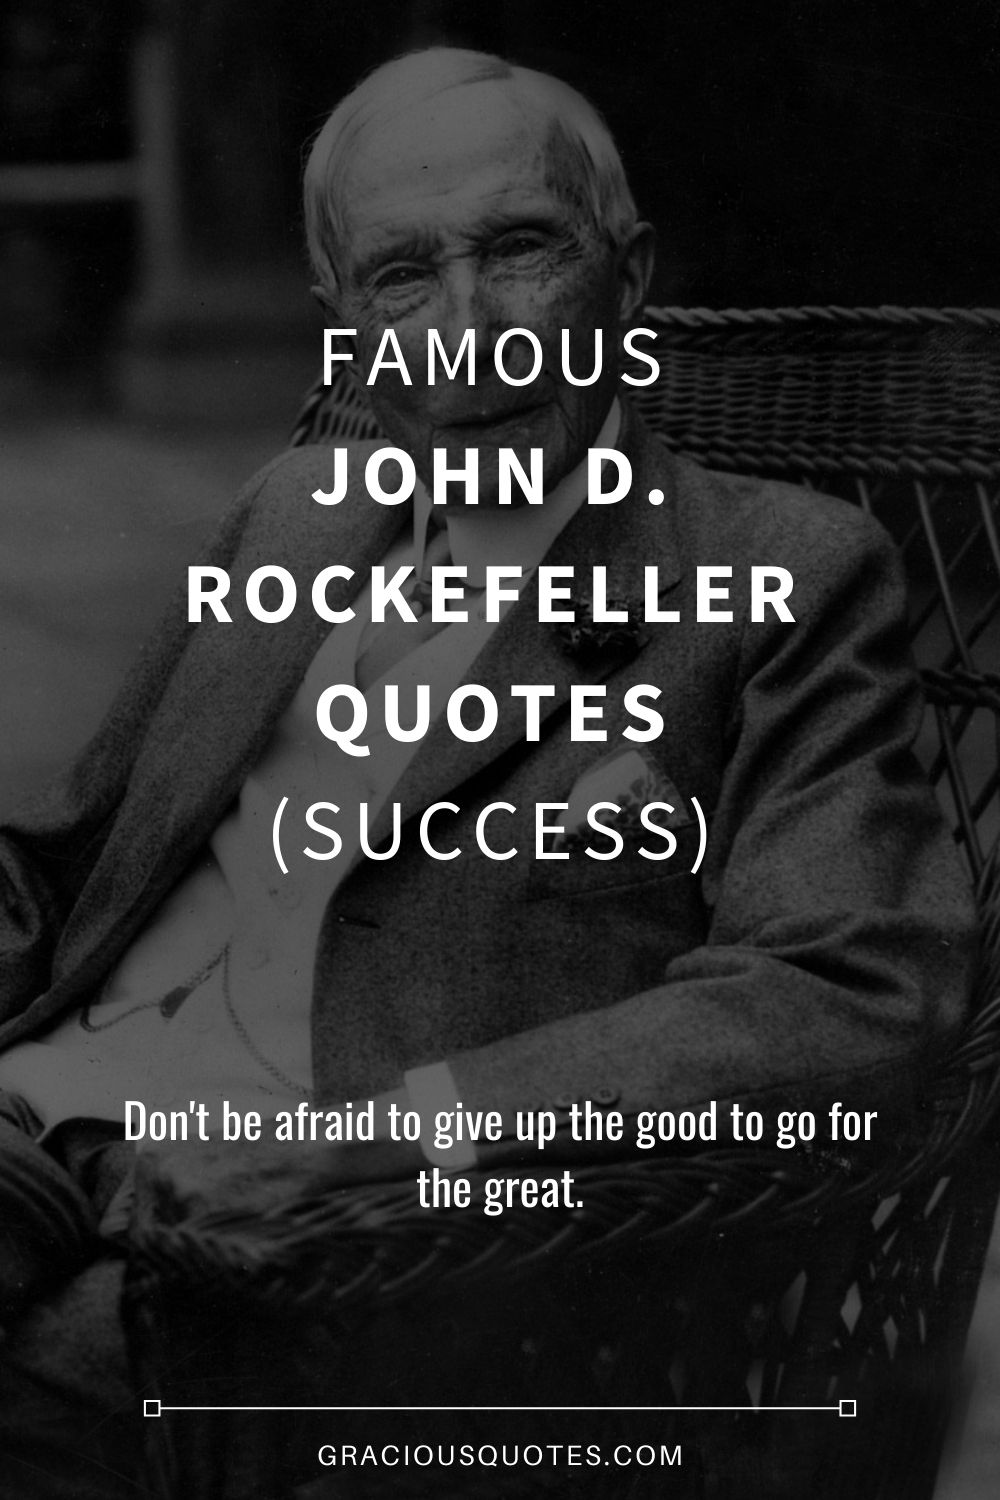 Famous John D. Rockefeller Quotes (SUCCESS) - Gracious Quotes (EDITED)